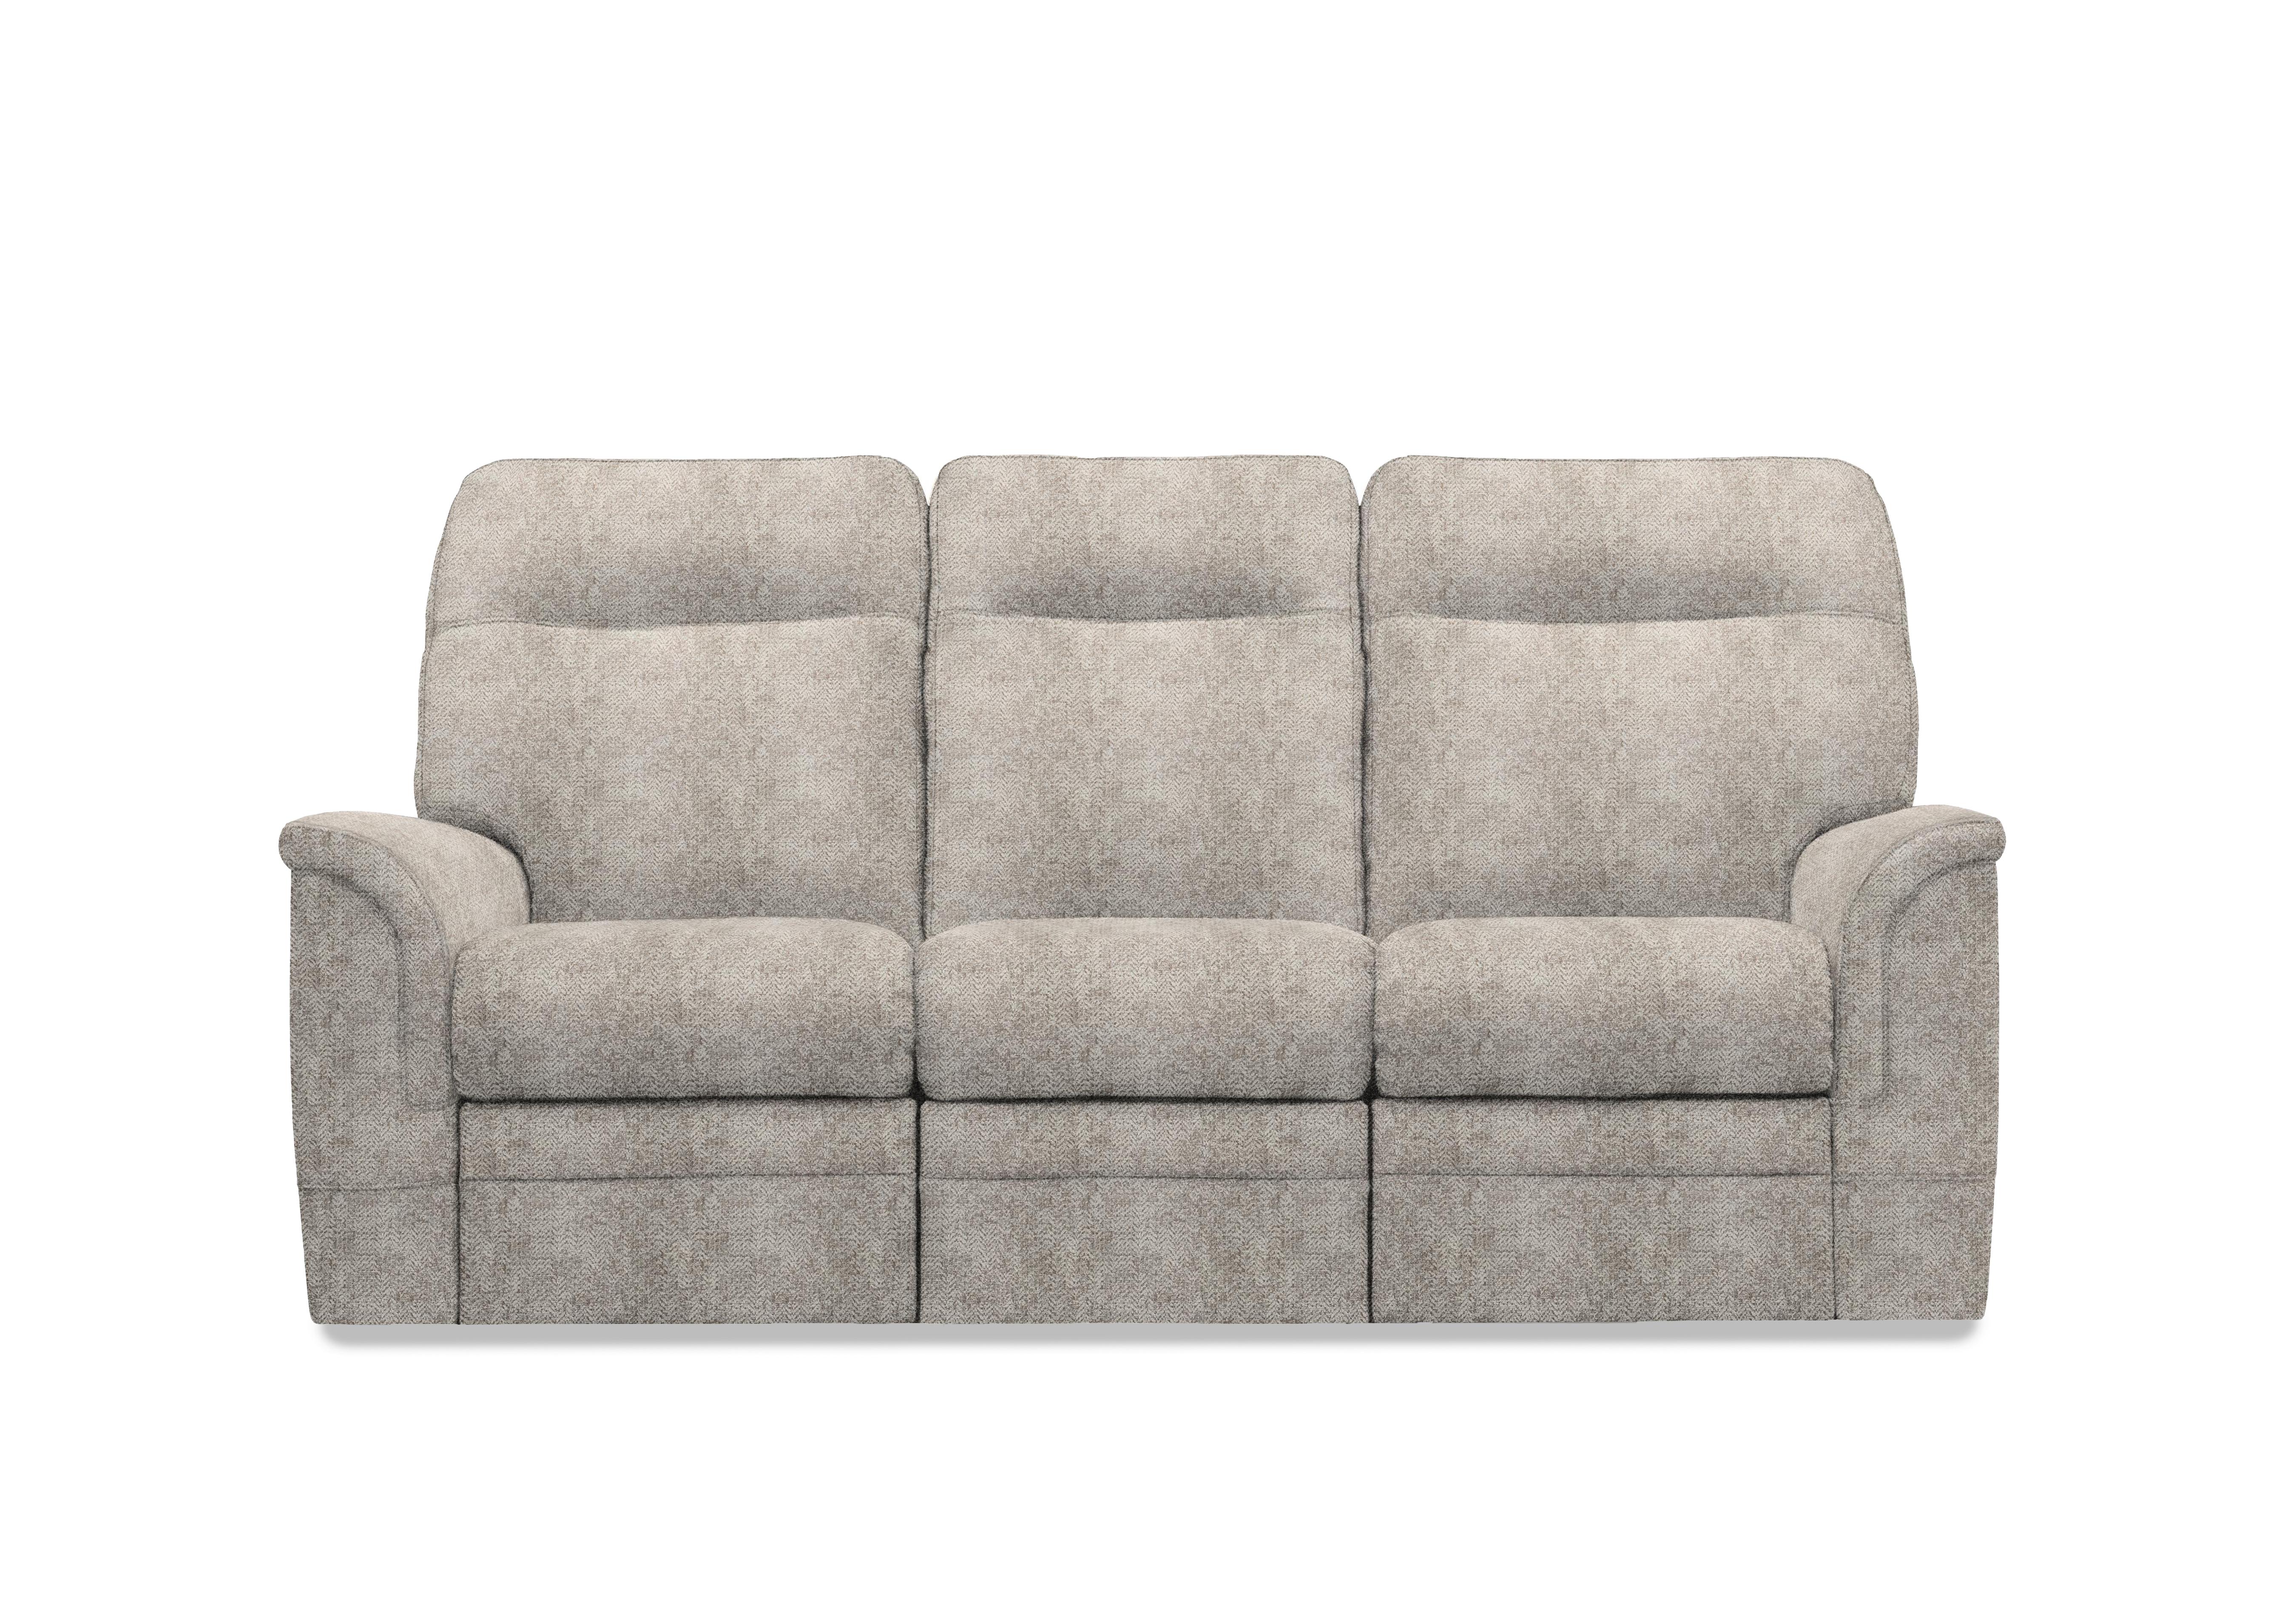 Hudson 23 Fabric 3 Seater Sofa in Ida Stone 006035-0055 on Furniture Village